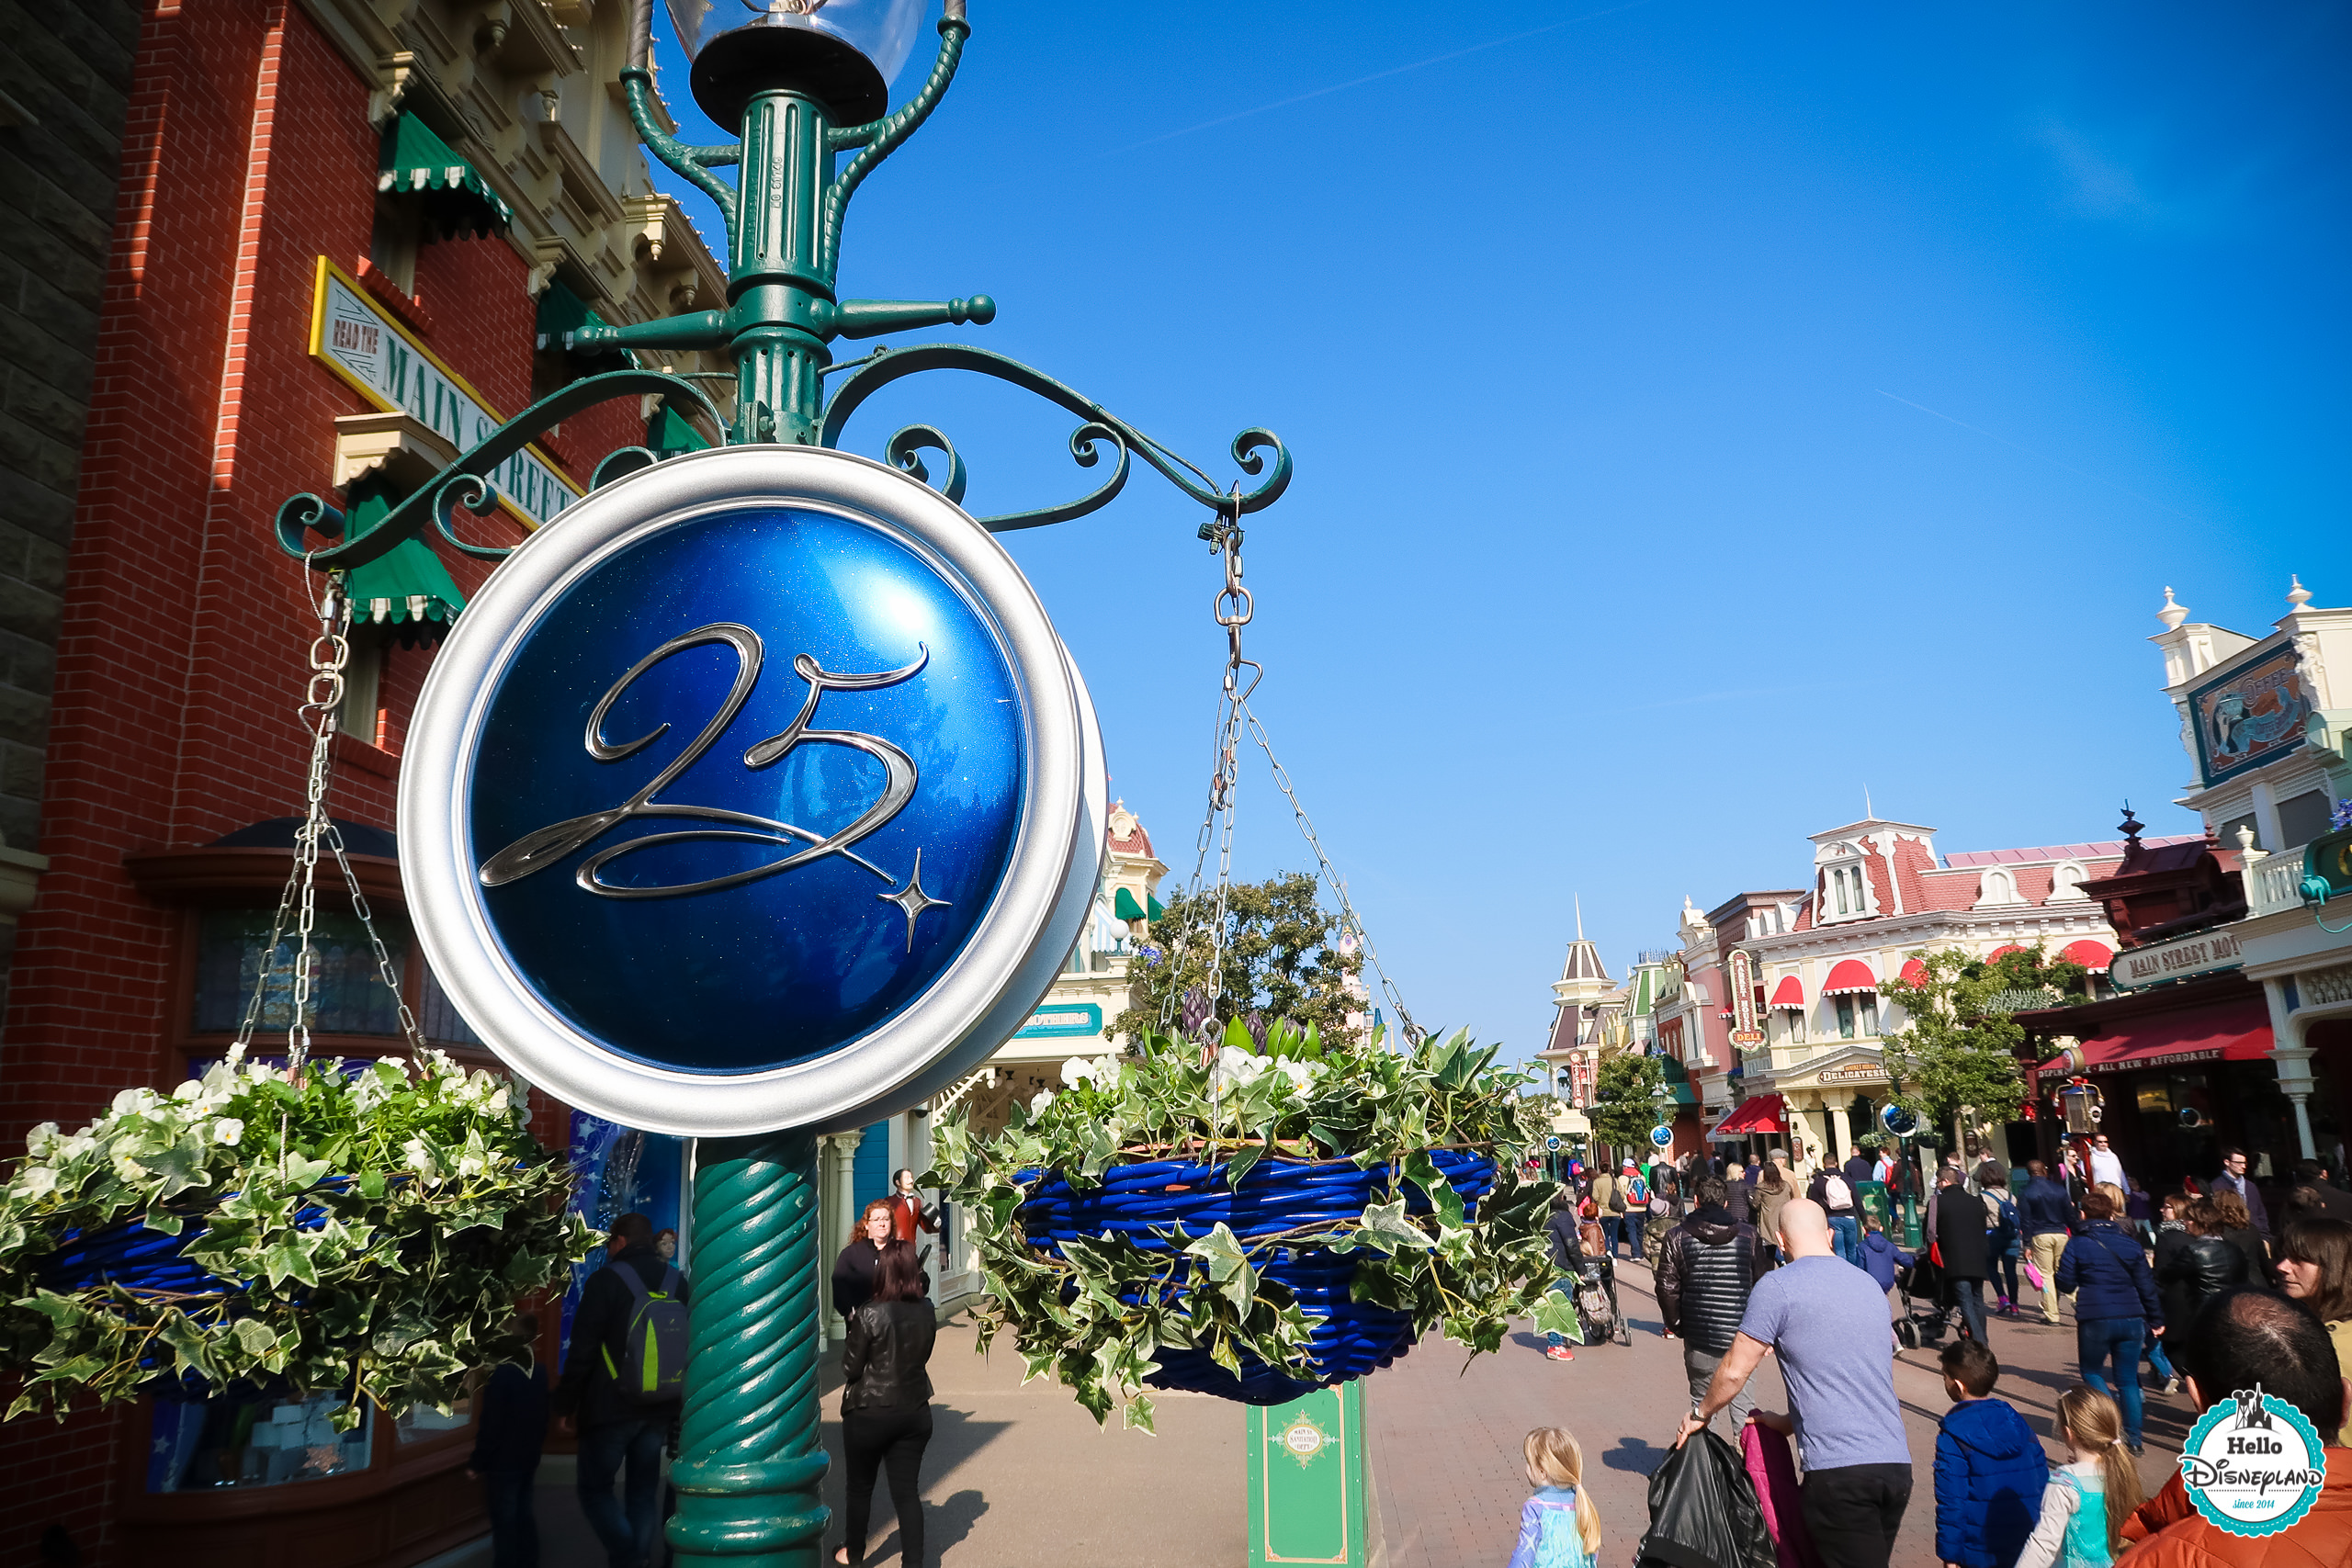 25 ans - Disneyland Paris / Disneyland Paris 25th